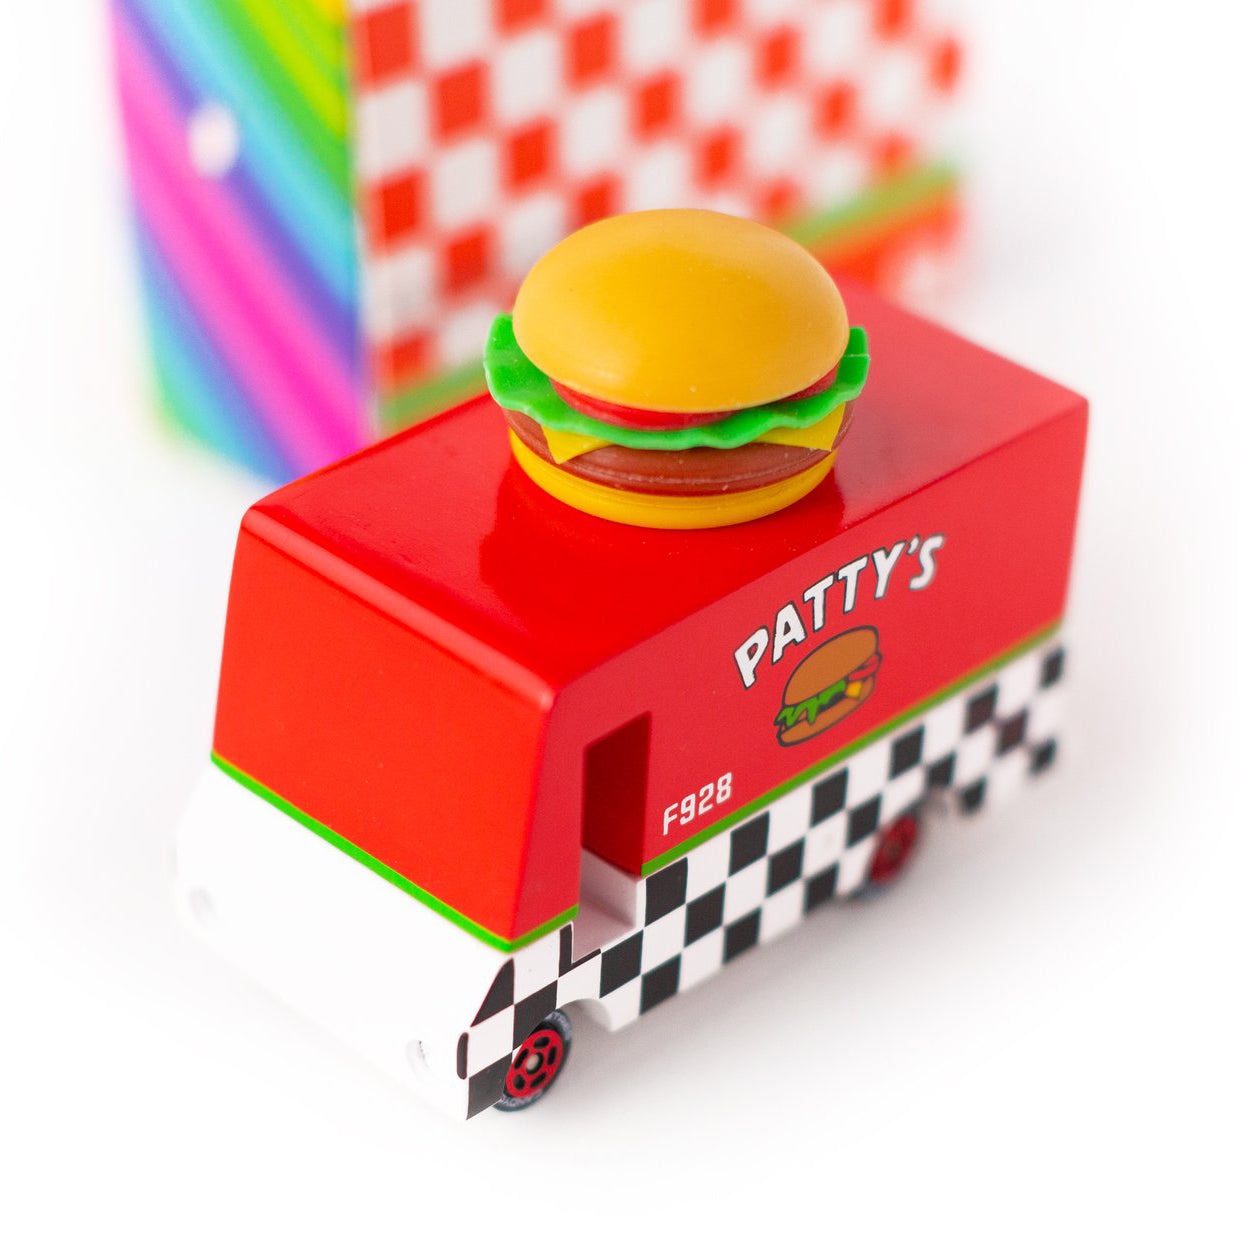 Candyvan Patty's Burger Van